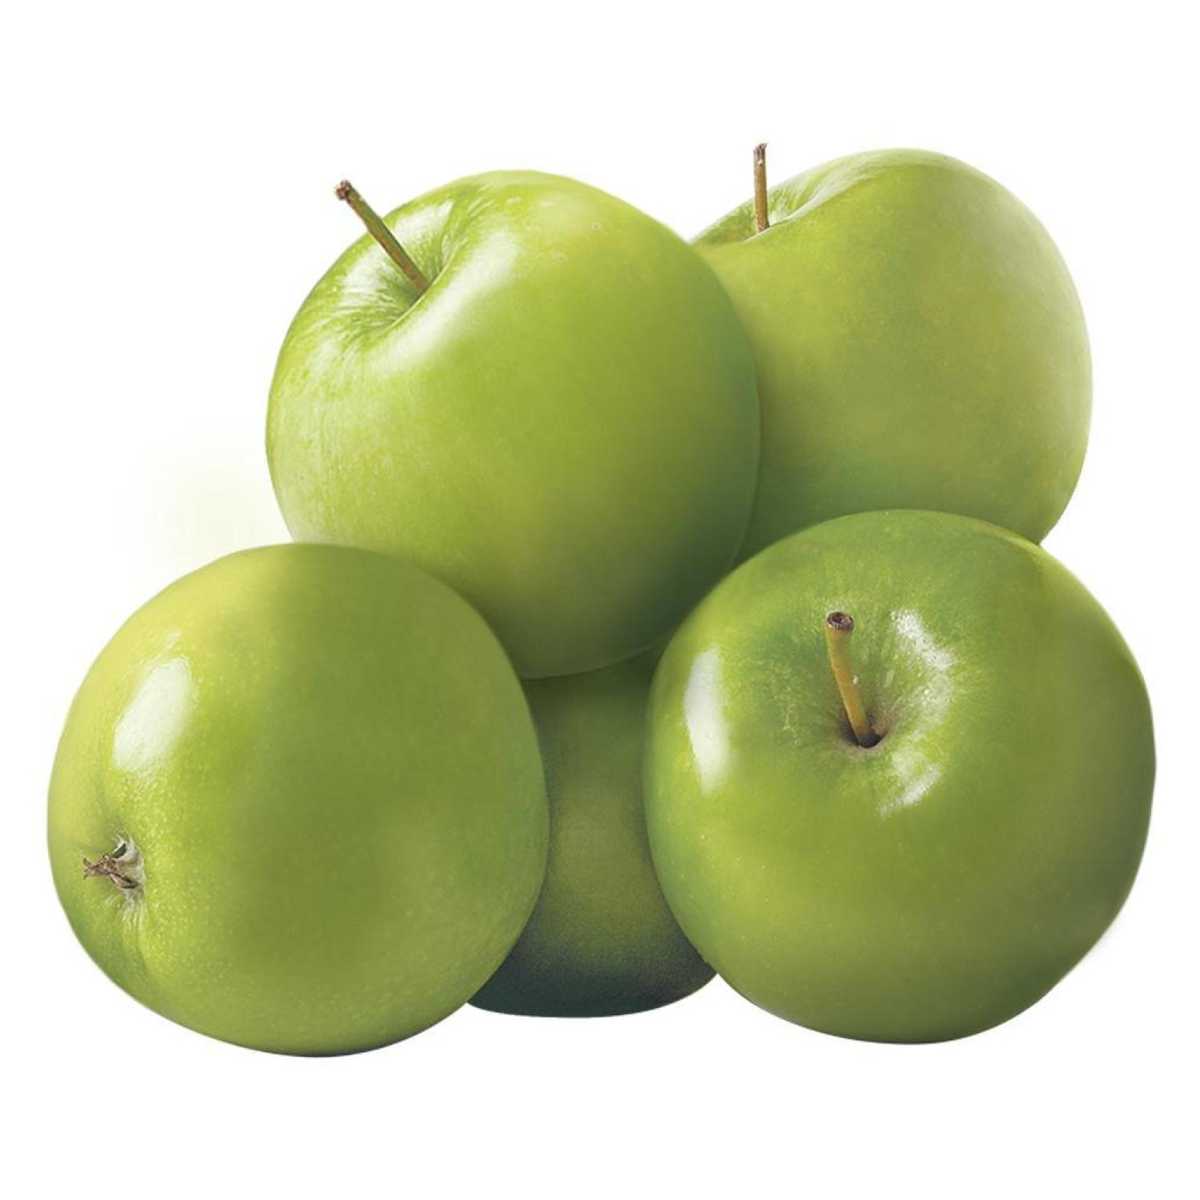 Organic Granny Smith Apples Bag Delivery - DoorDash